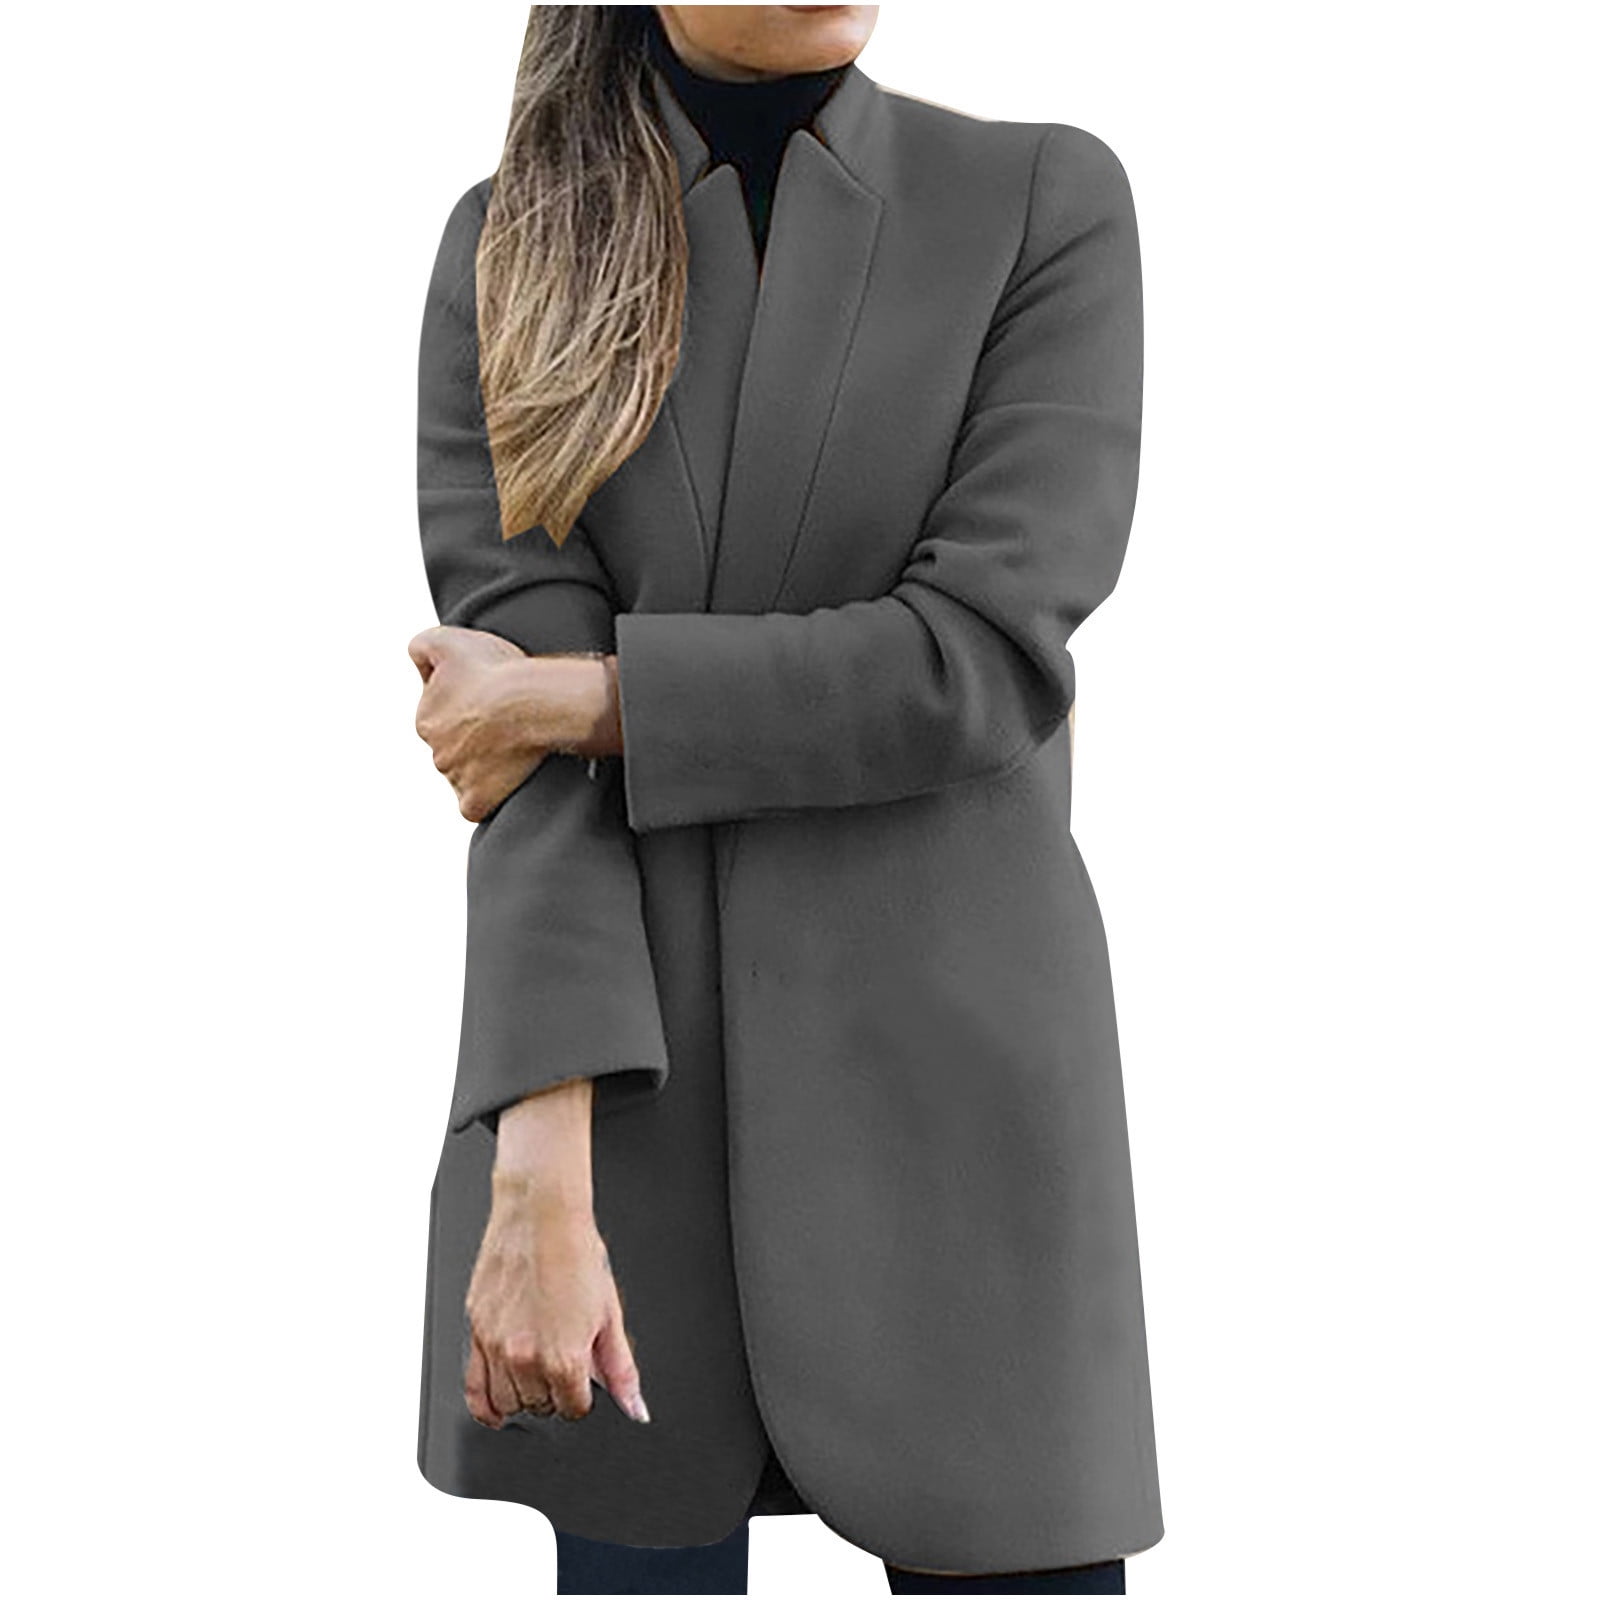 Women Winter Warm Wool Blend Mid-Long Coat Lapel Single Breasted Jacket  Outwear Pea Coat for Cold Weather